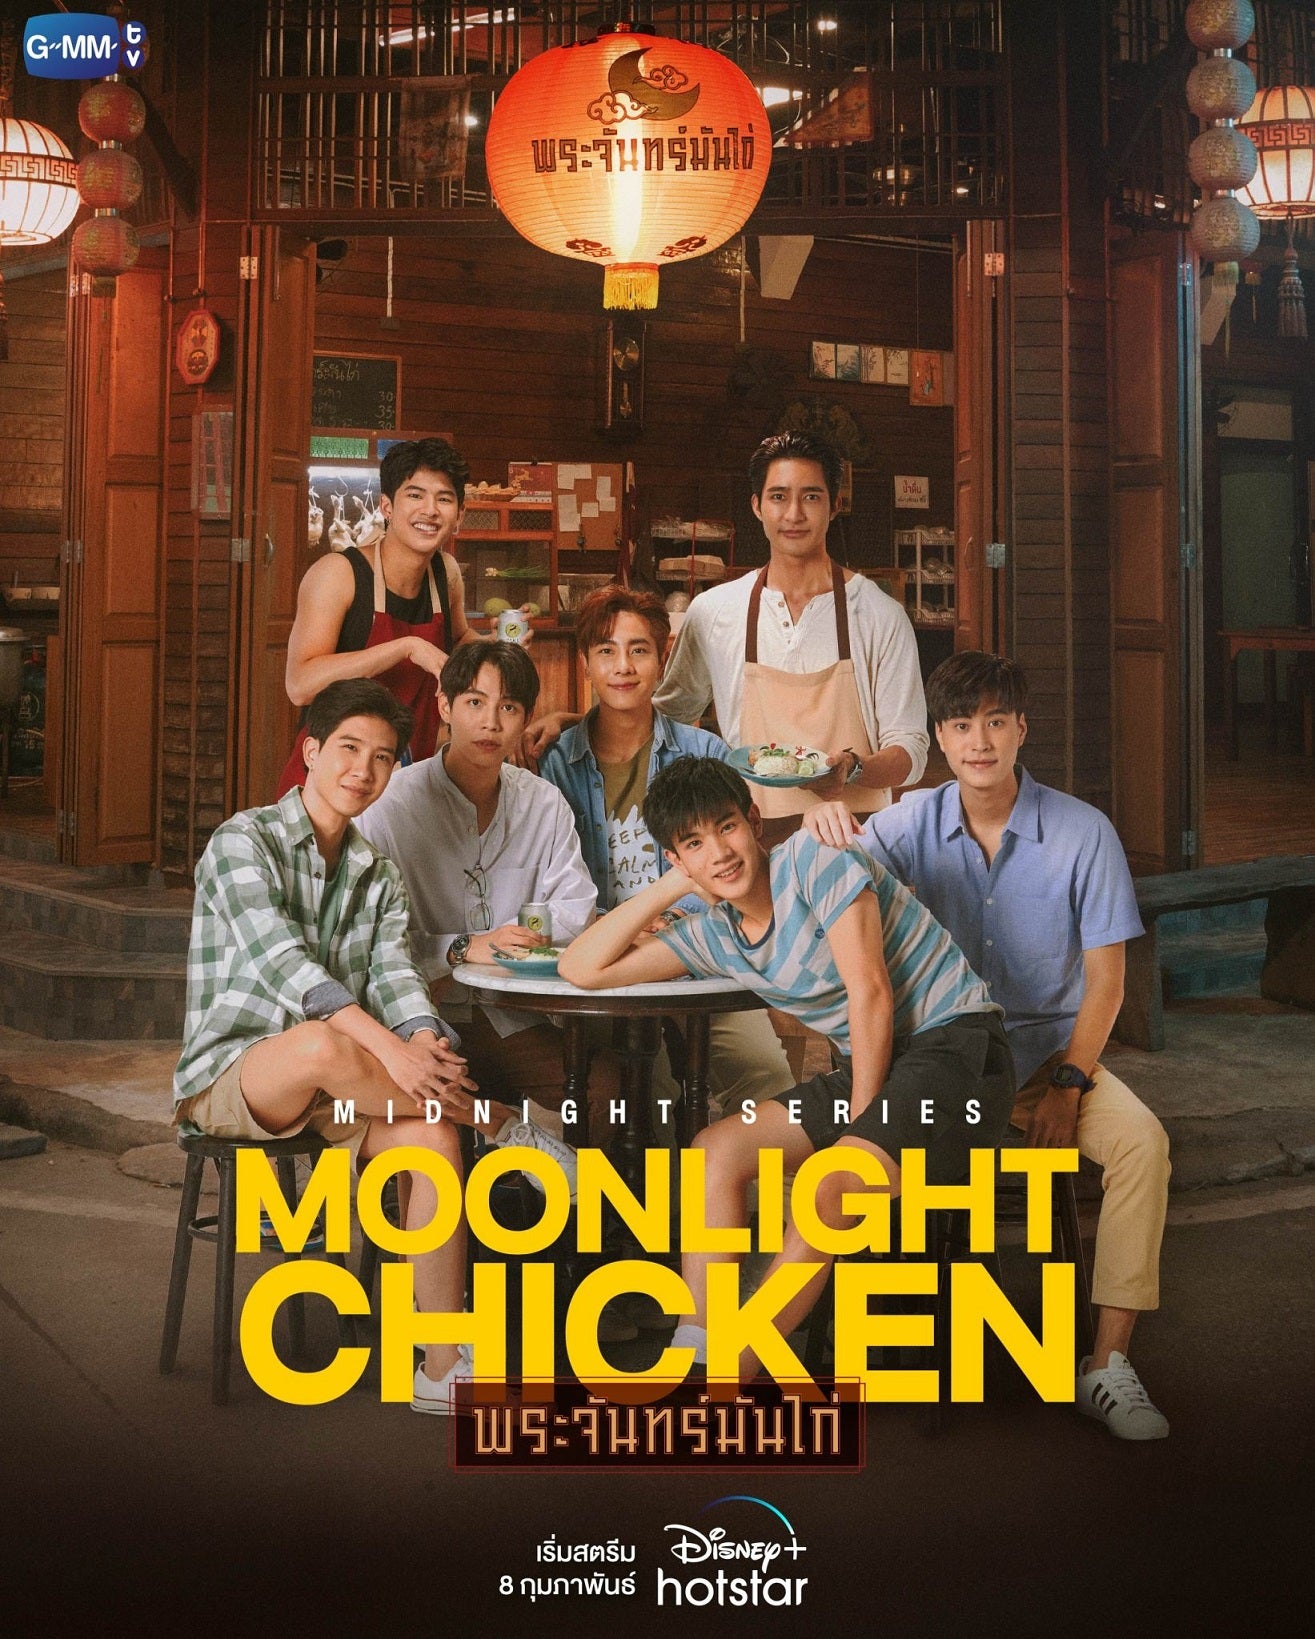 TV ratings for Moonlight Chicken (Midnight Series : Moonlight Chicken พระจันทร์มันไก่) in New Zealand. GMM 25 TV series